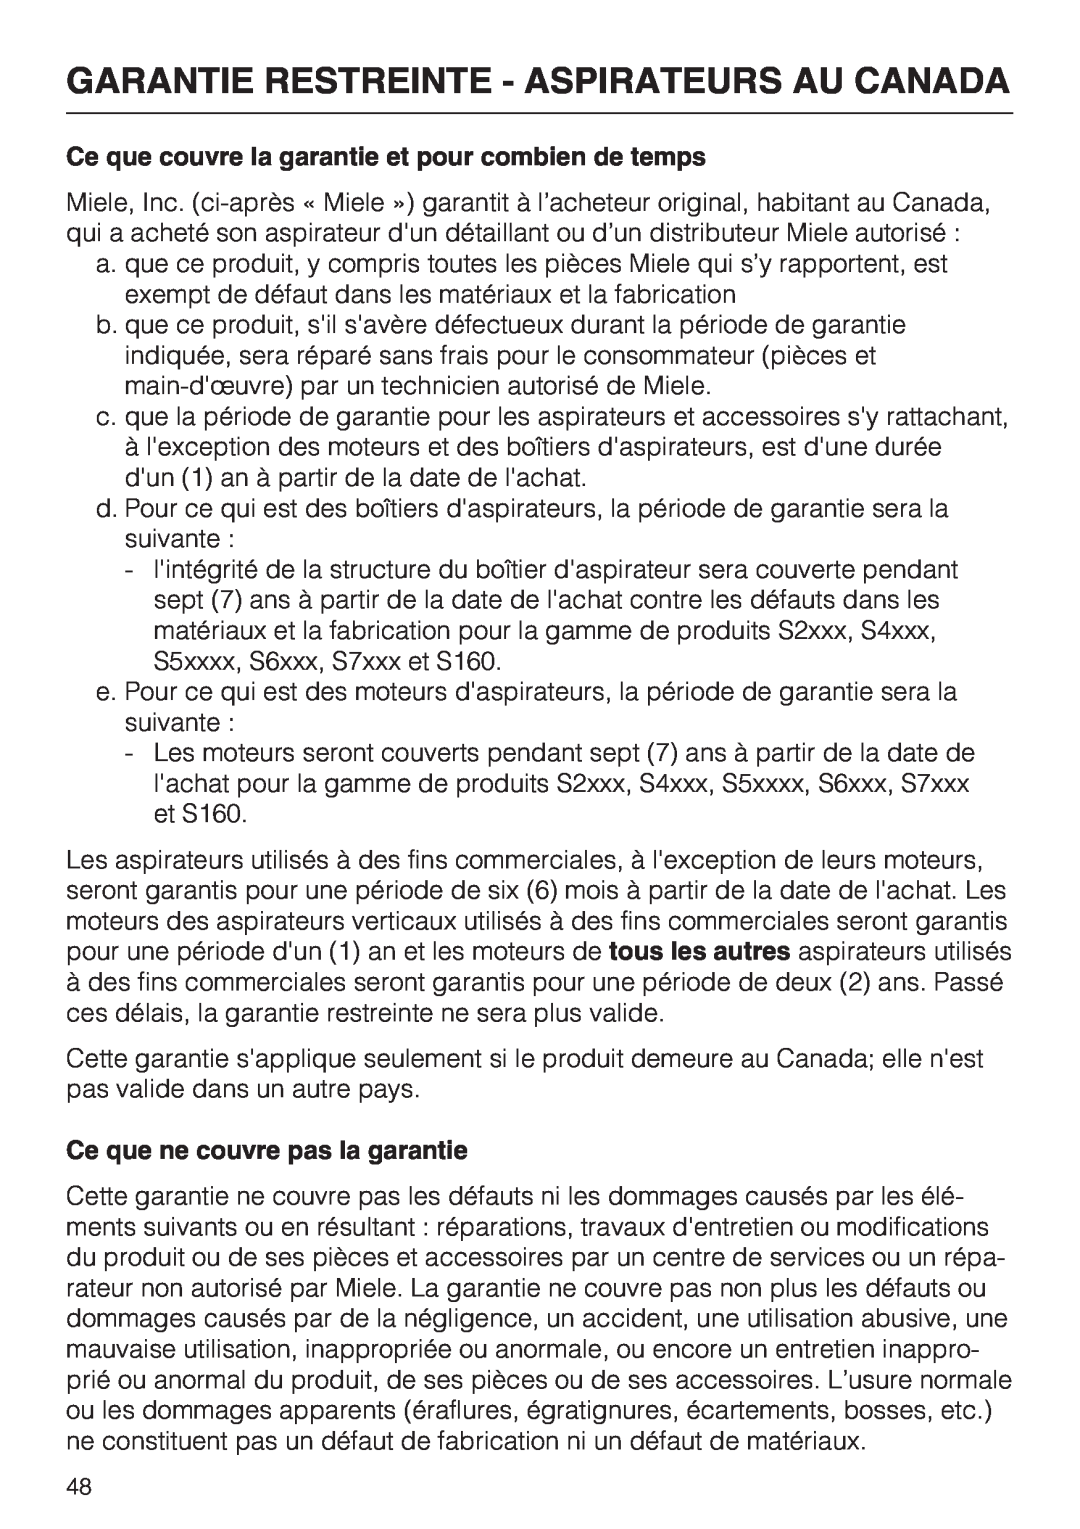 Miele S 8900 manual Garantie Restreinte - Aspirateurs Au Canada, Ce que ne couvre pas la garantie 